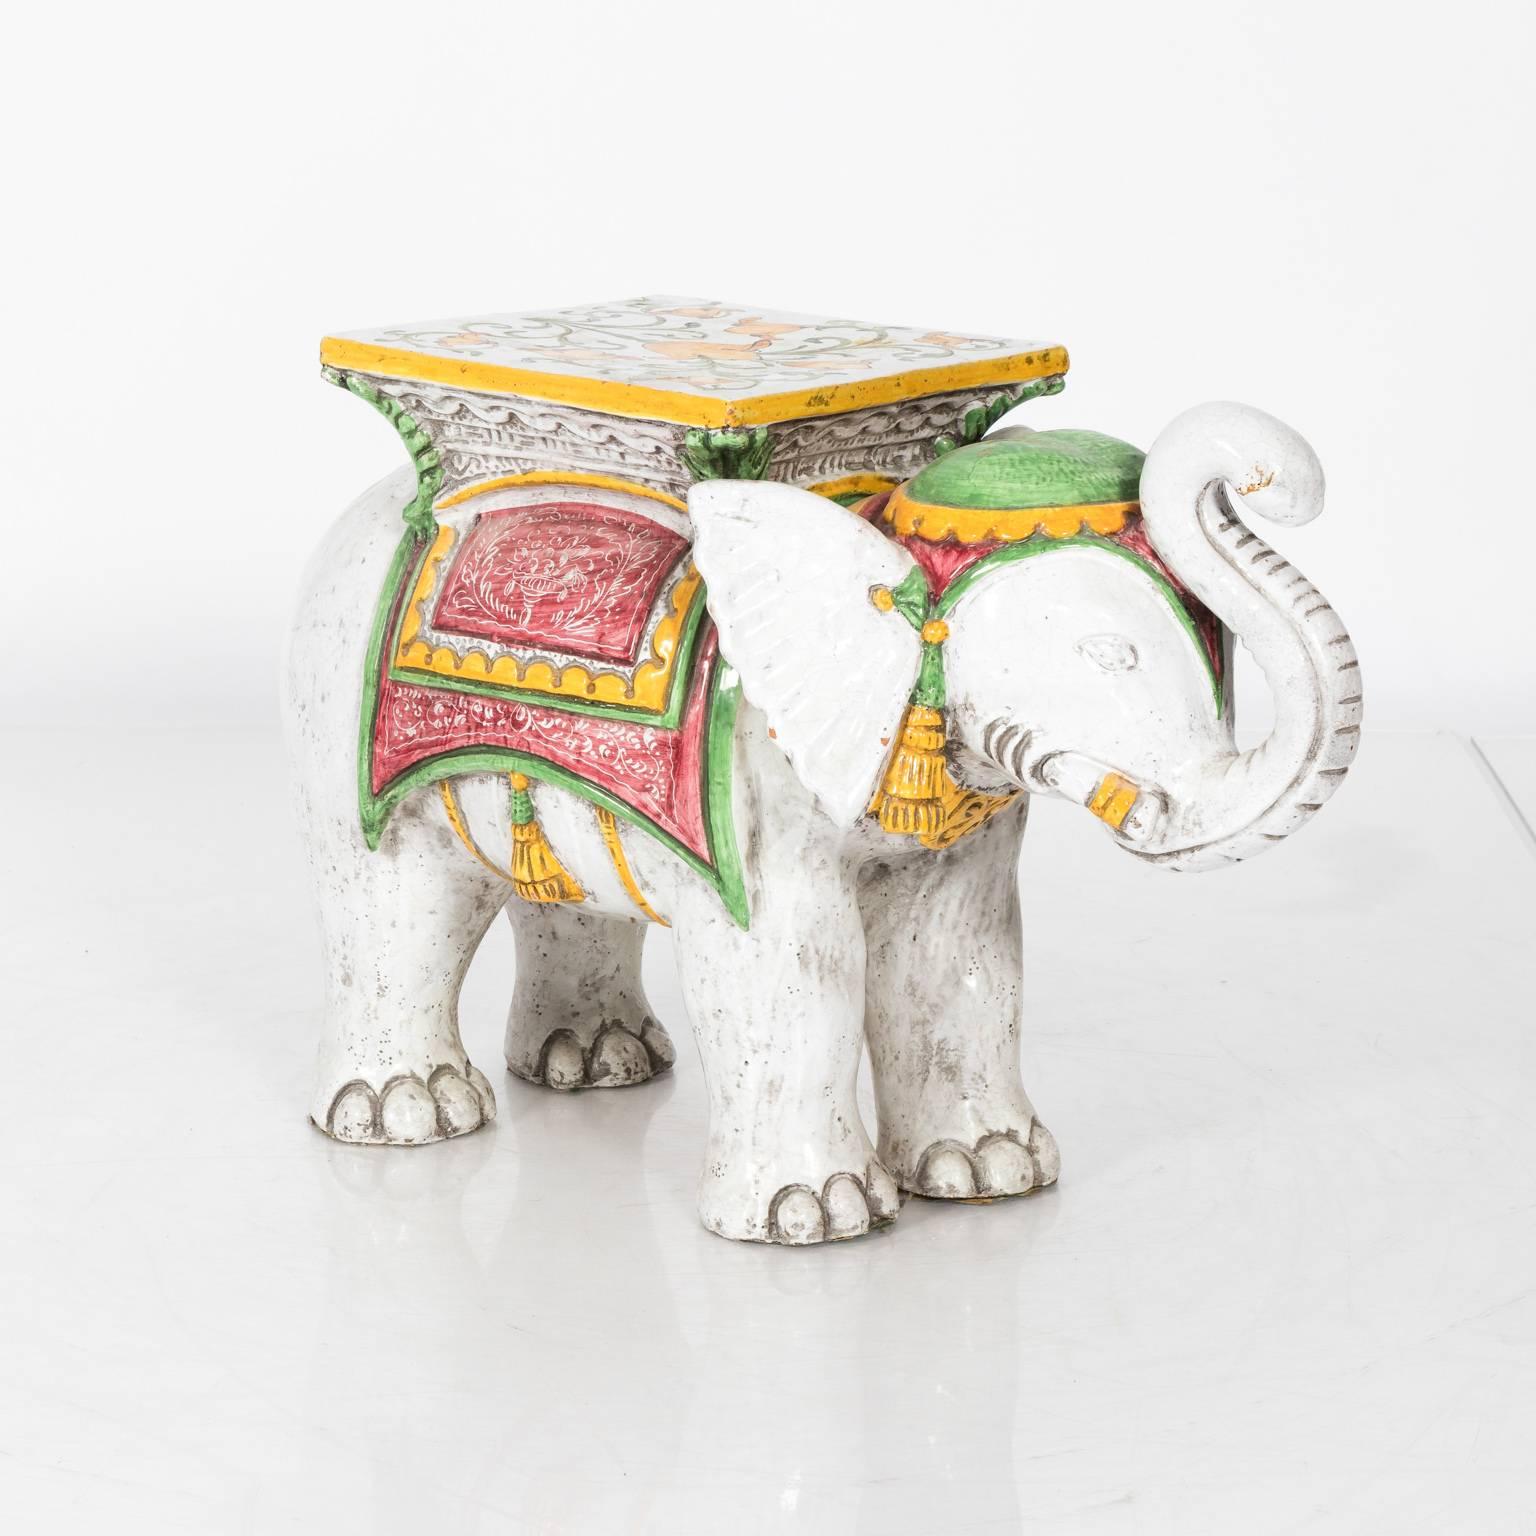 1970s hand-painted elephant ceramic garden stool.
 